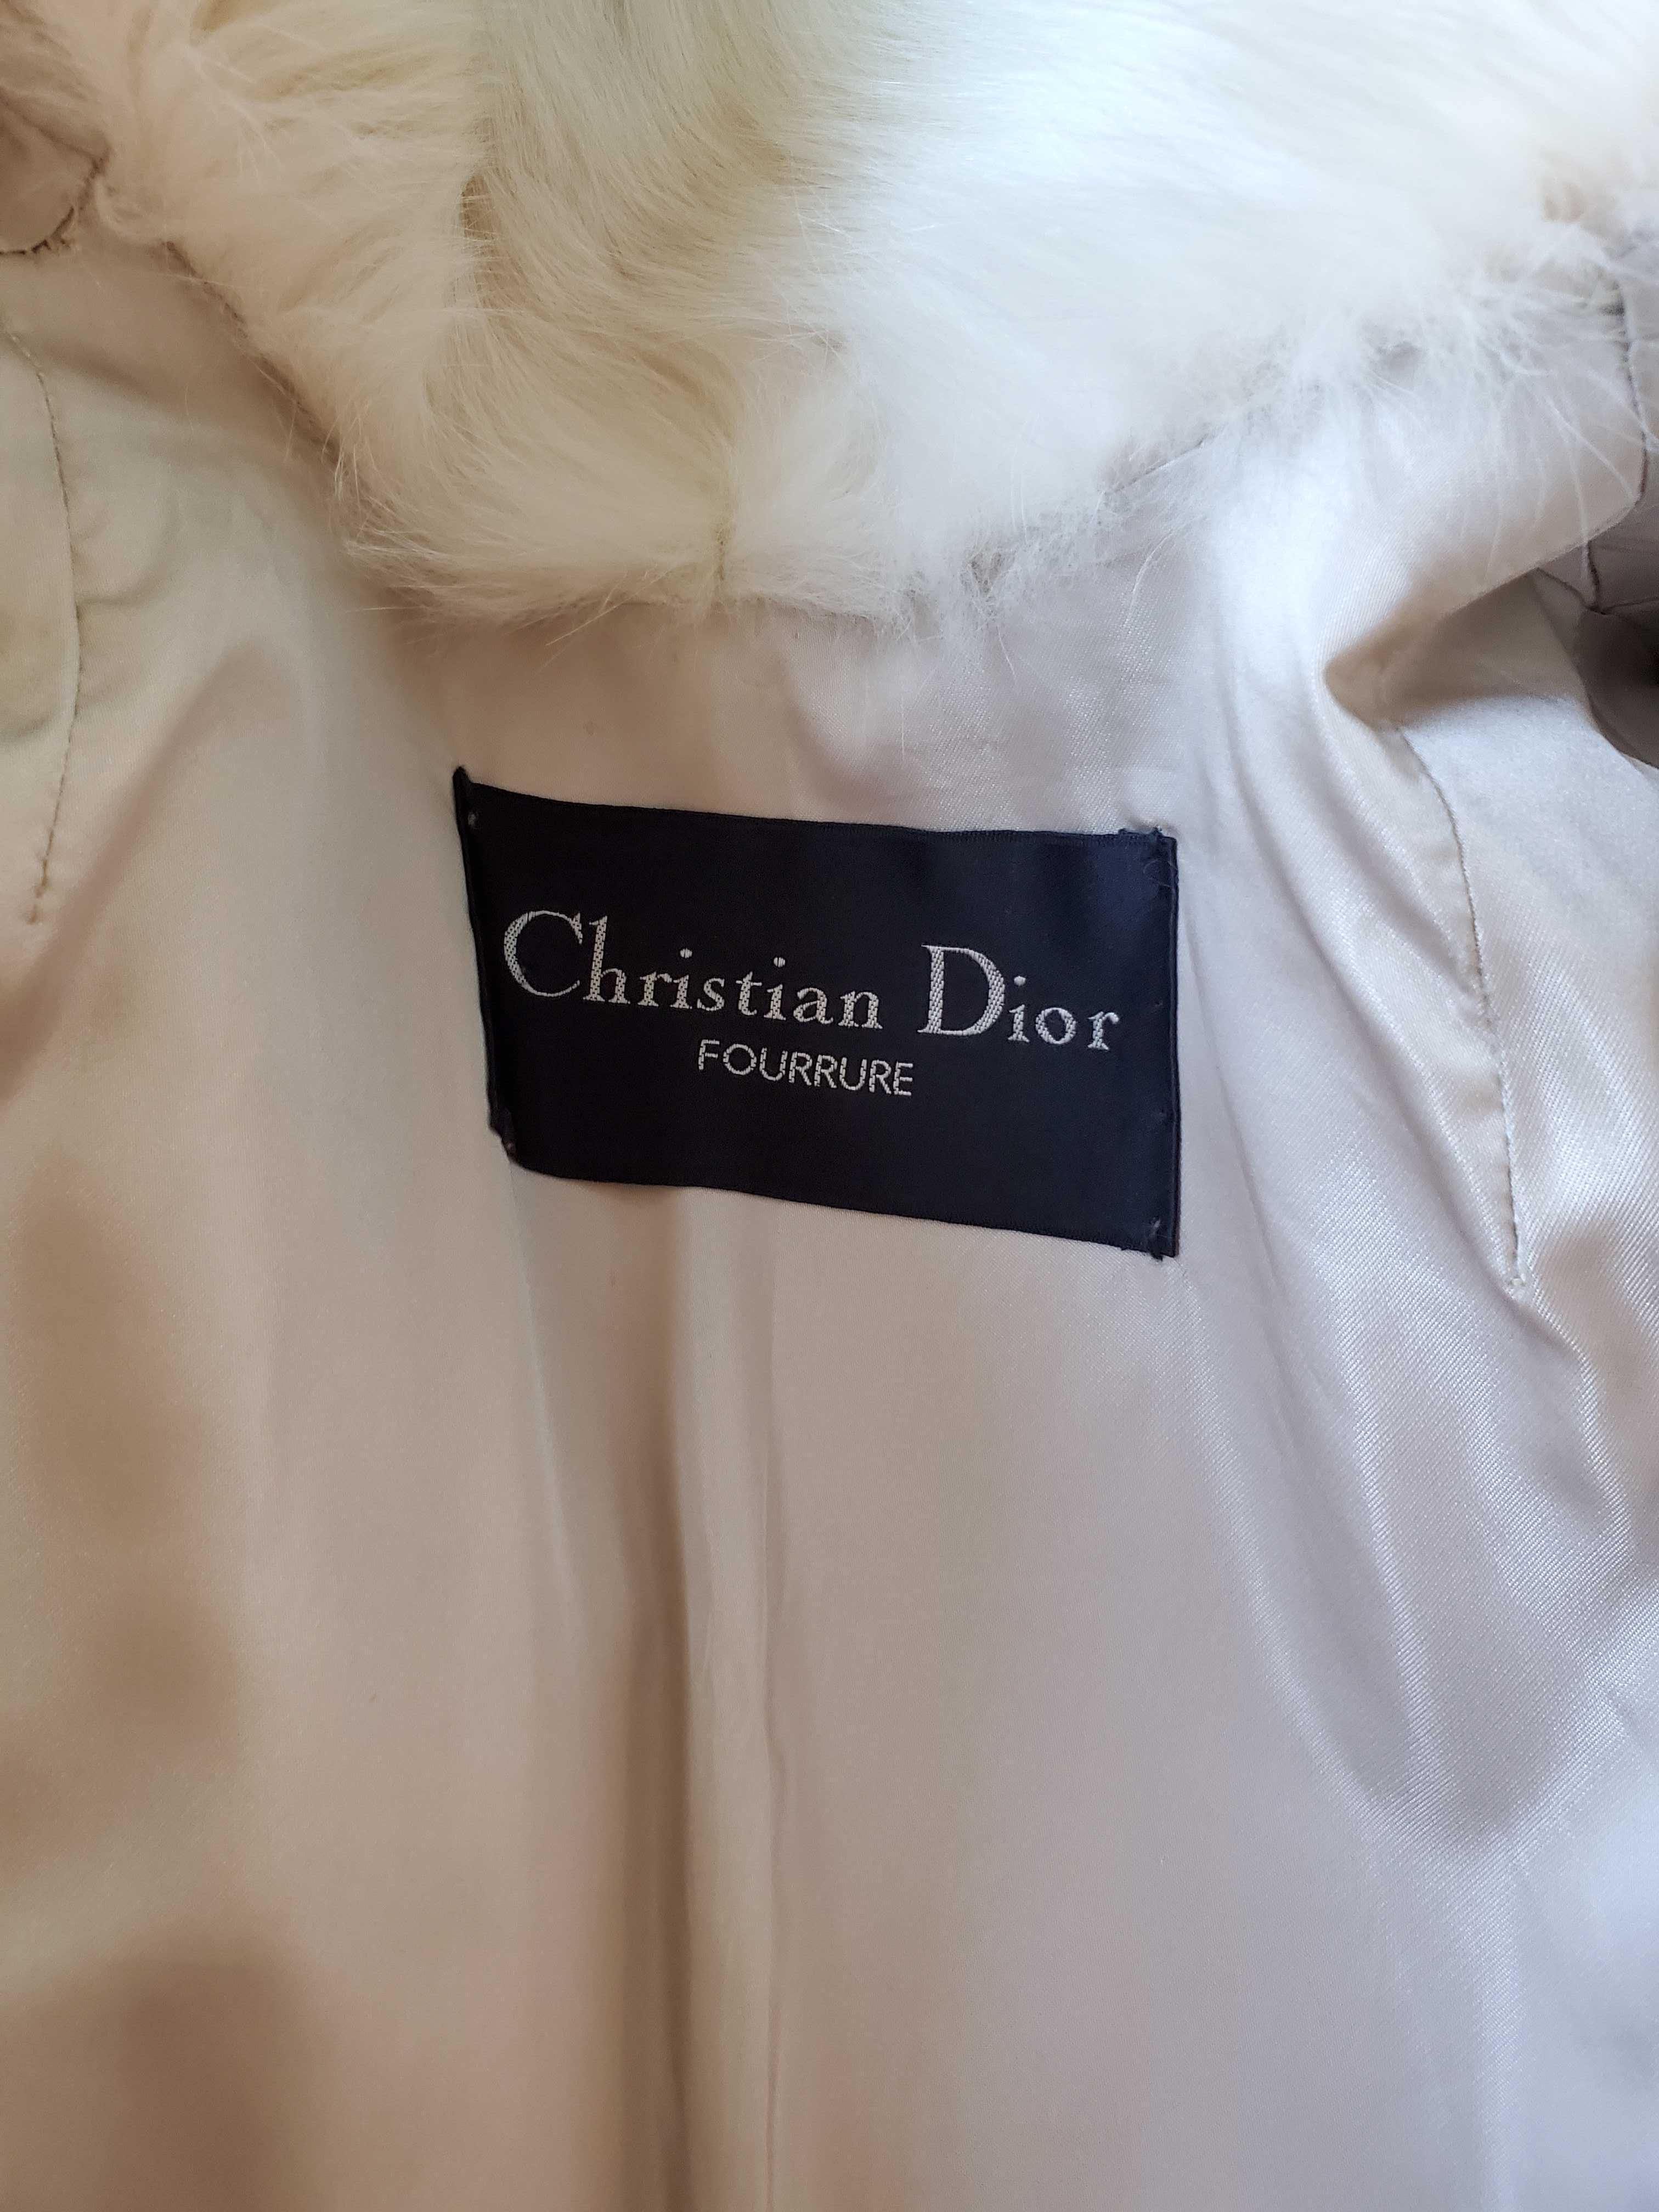 Amazing Genuine Christian Dior Fourrure Mink & Fox Fur Stoller Coat